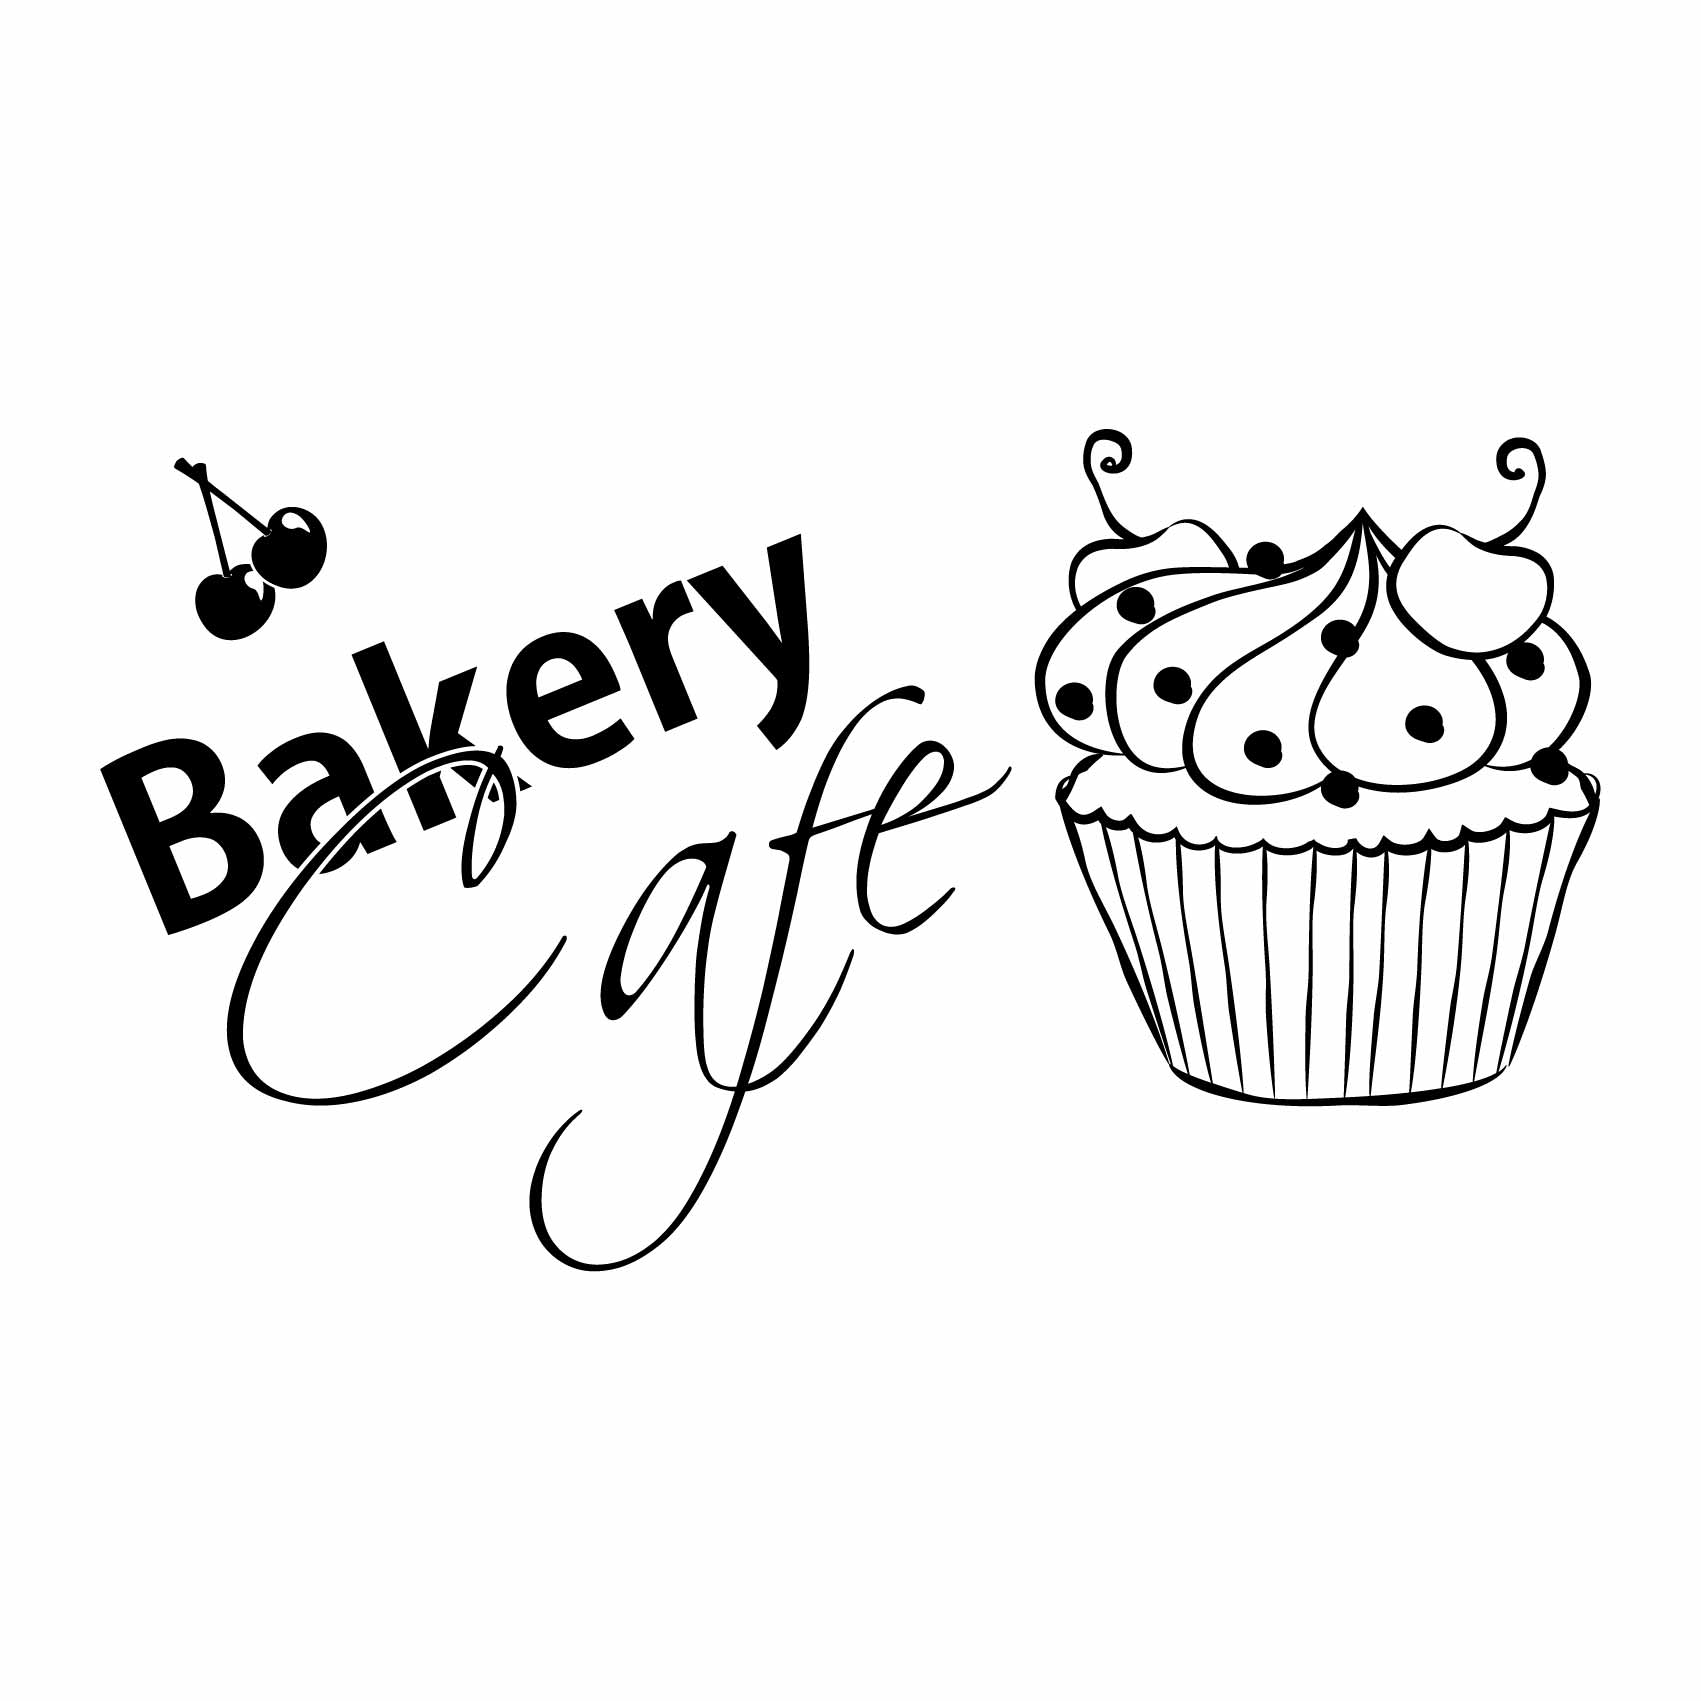 stickers-bakery-cafe-ref4cupcake-autocollant-muraux-cuisine-salle-a-manger-salon-sticker-mural-deco-gateau-cupcakes-gateaux-(2)